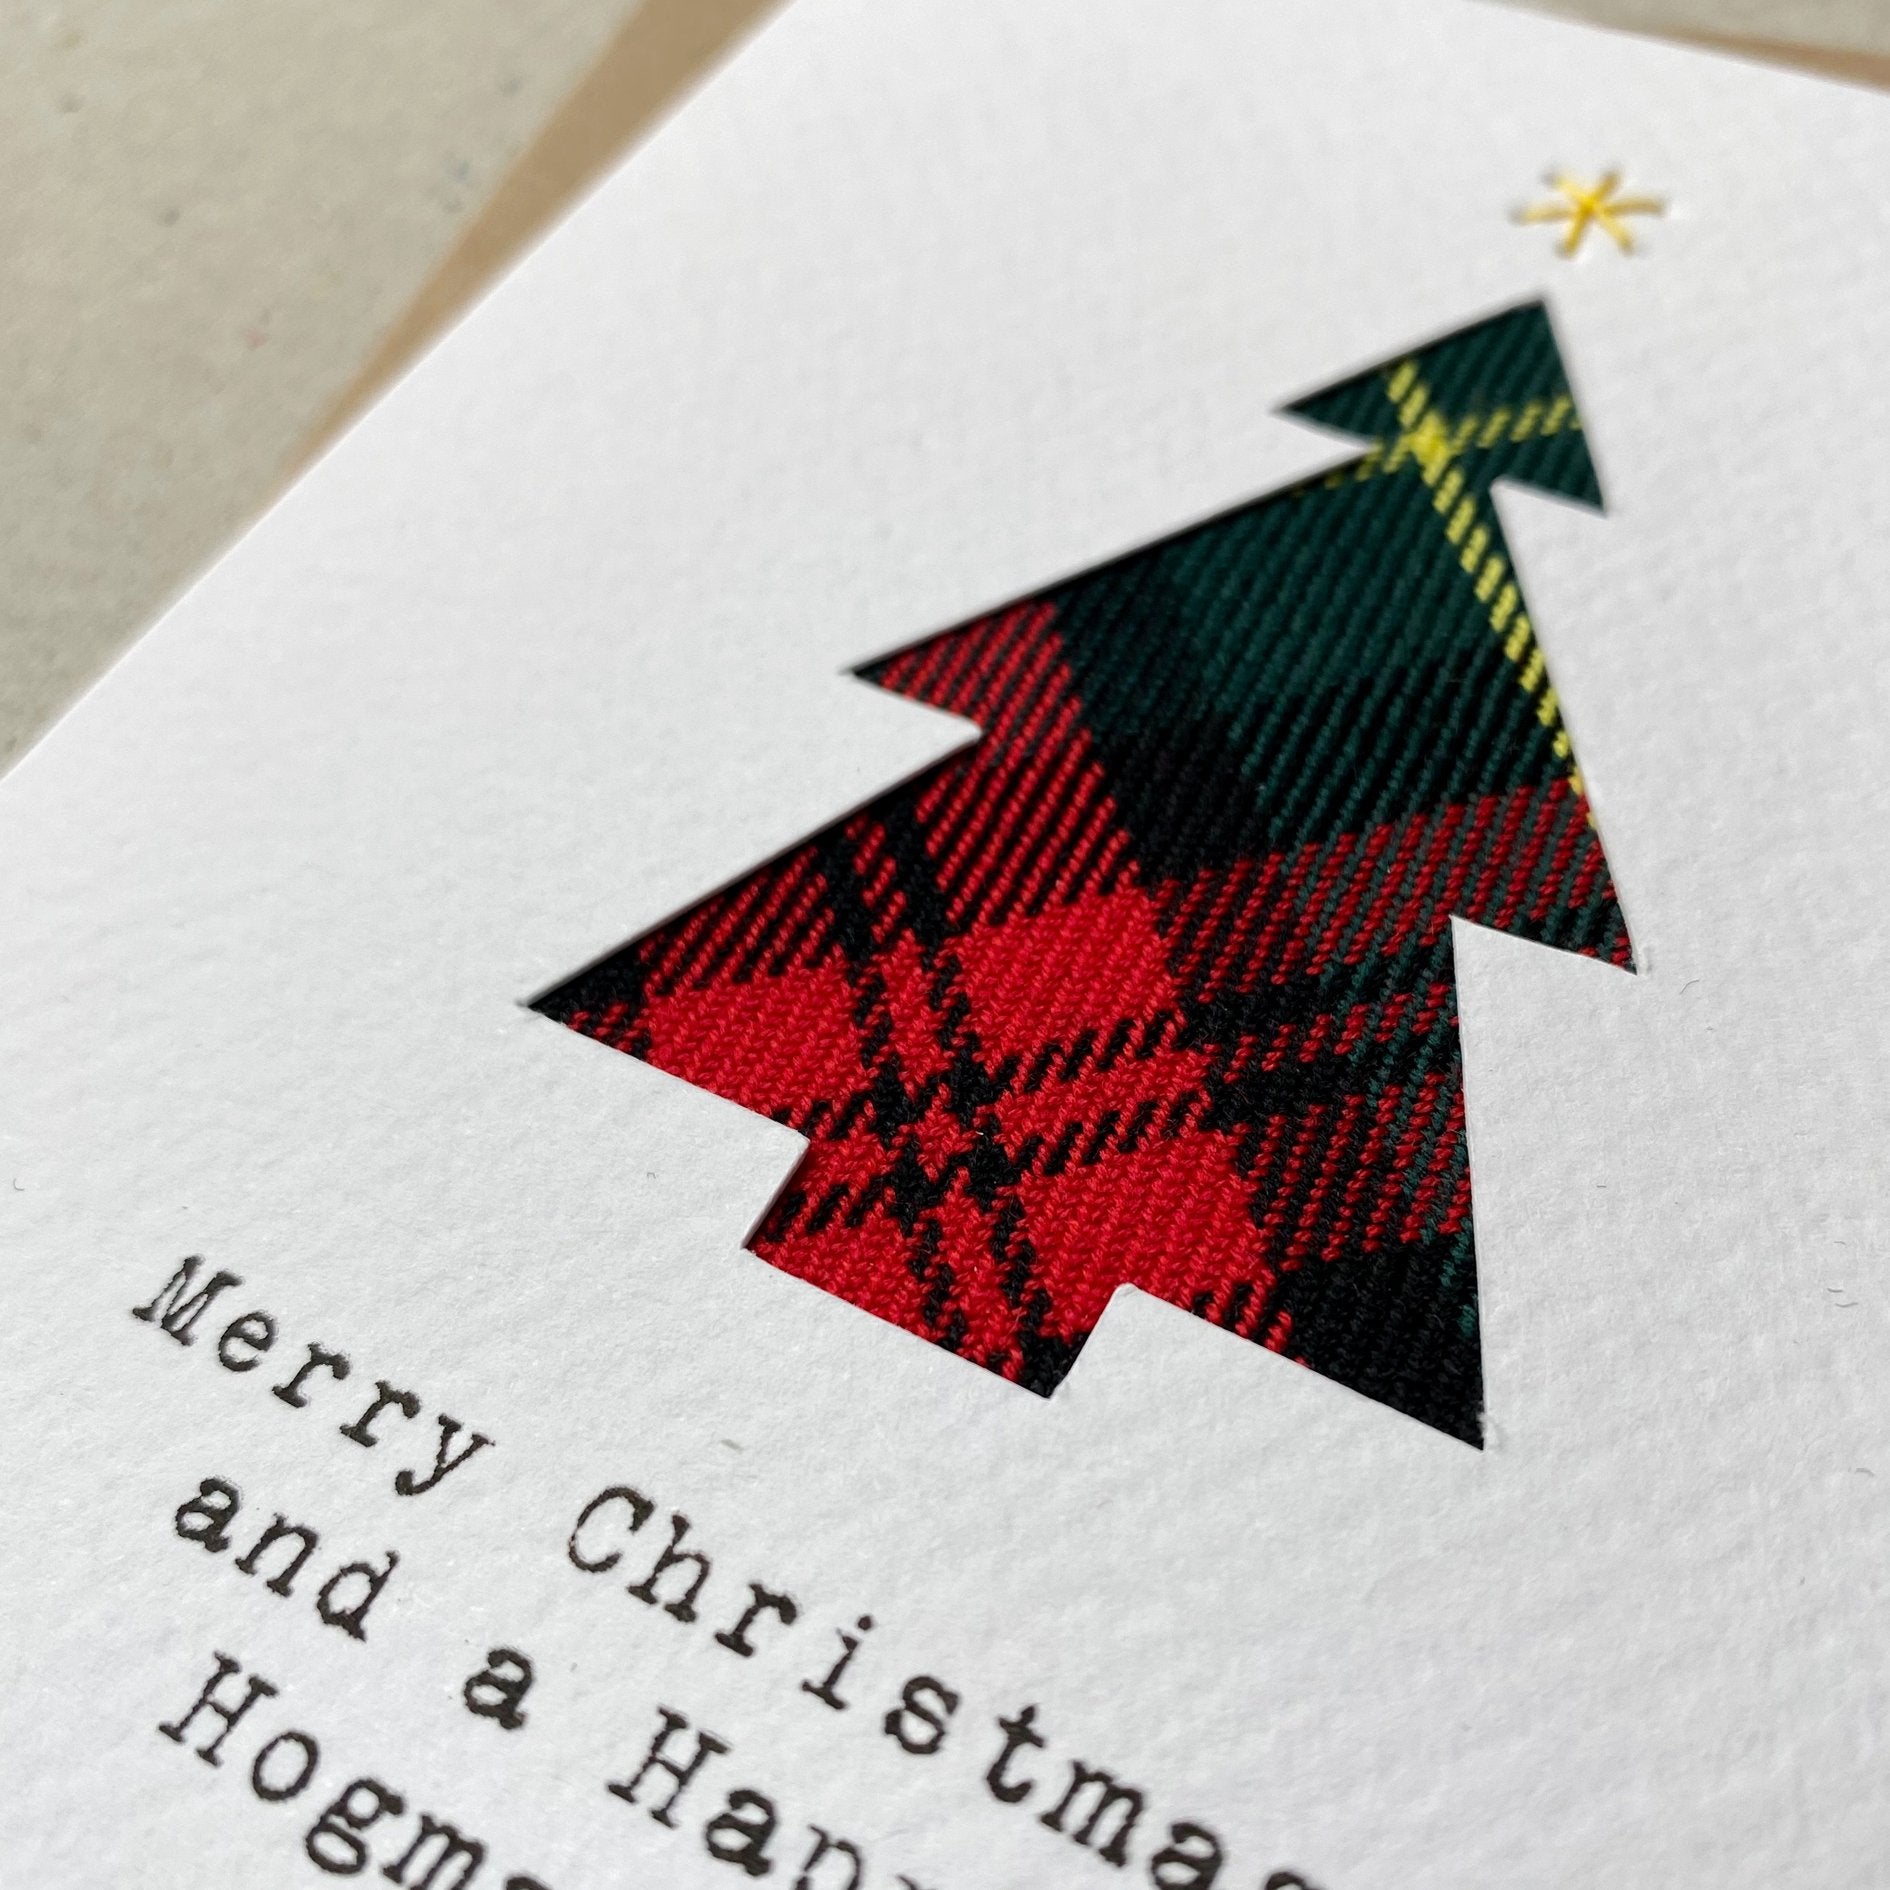 Hand Stitched Tartan Tree Christmas Card made by Hiyapal